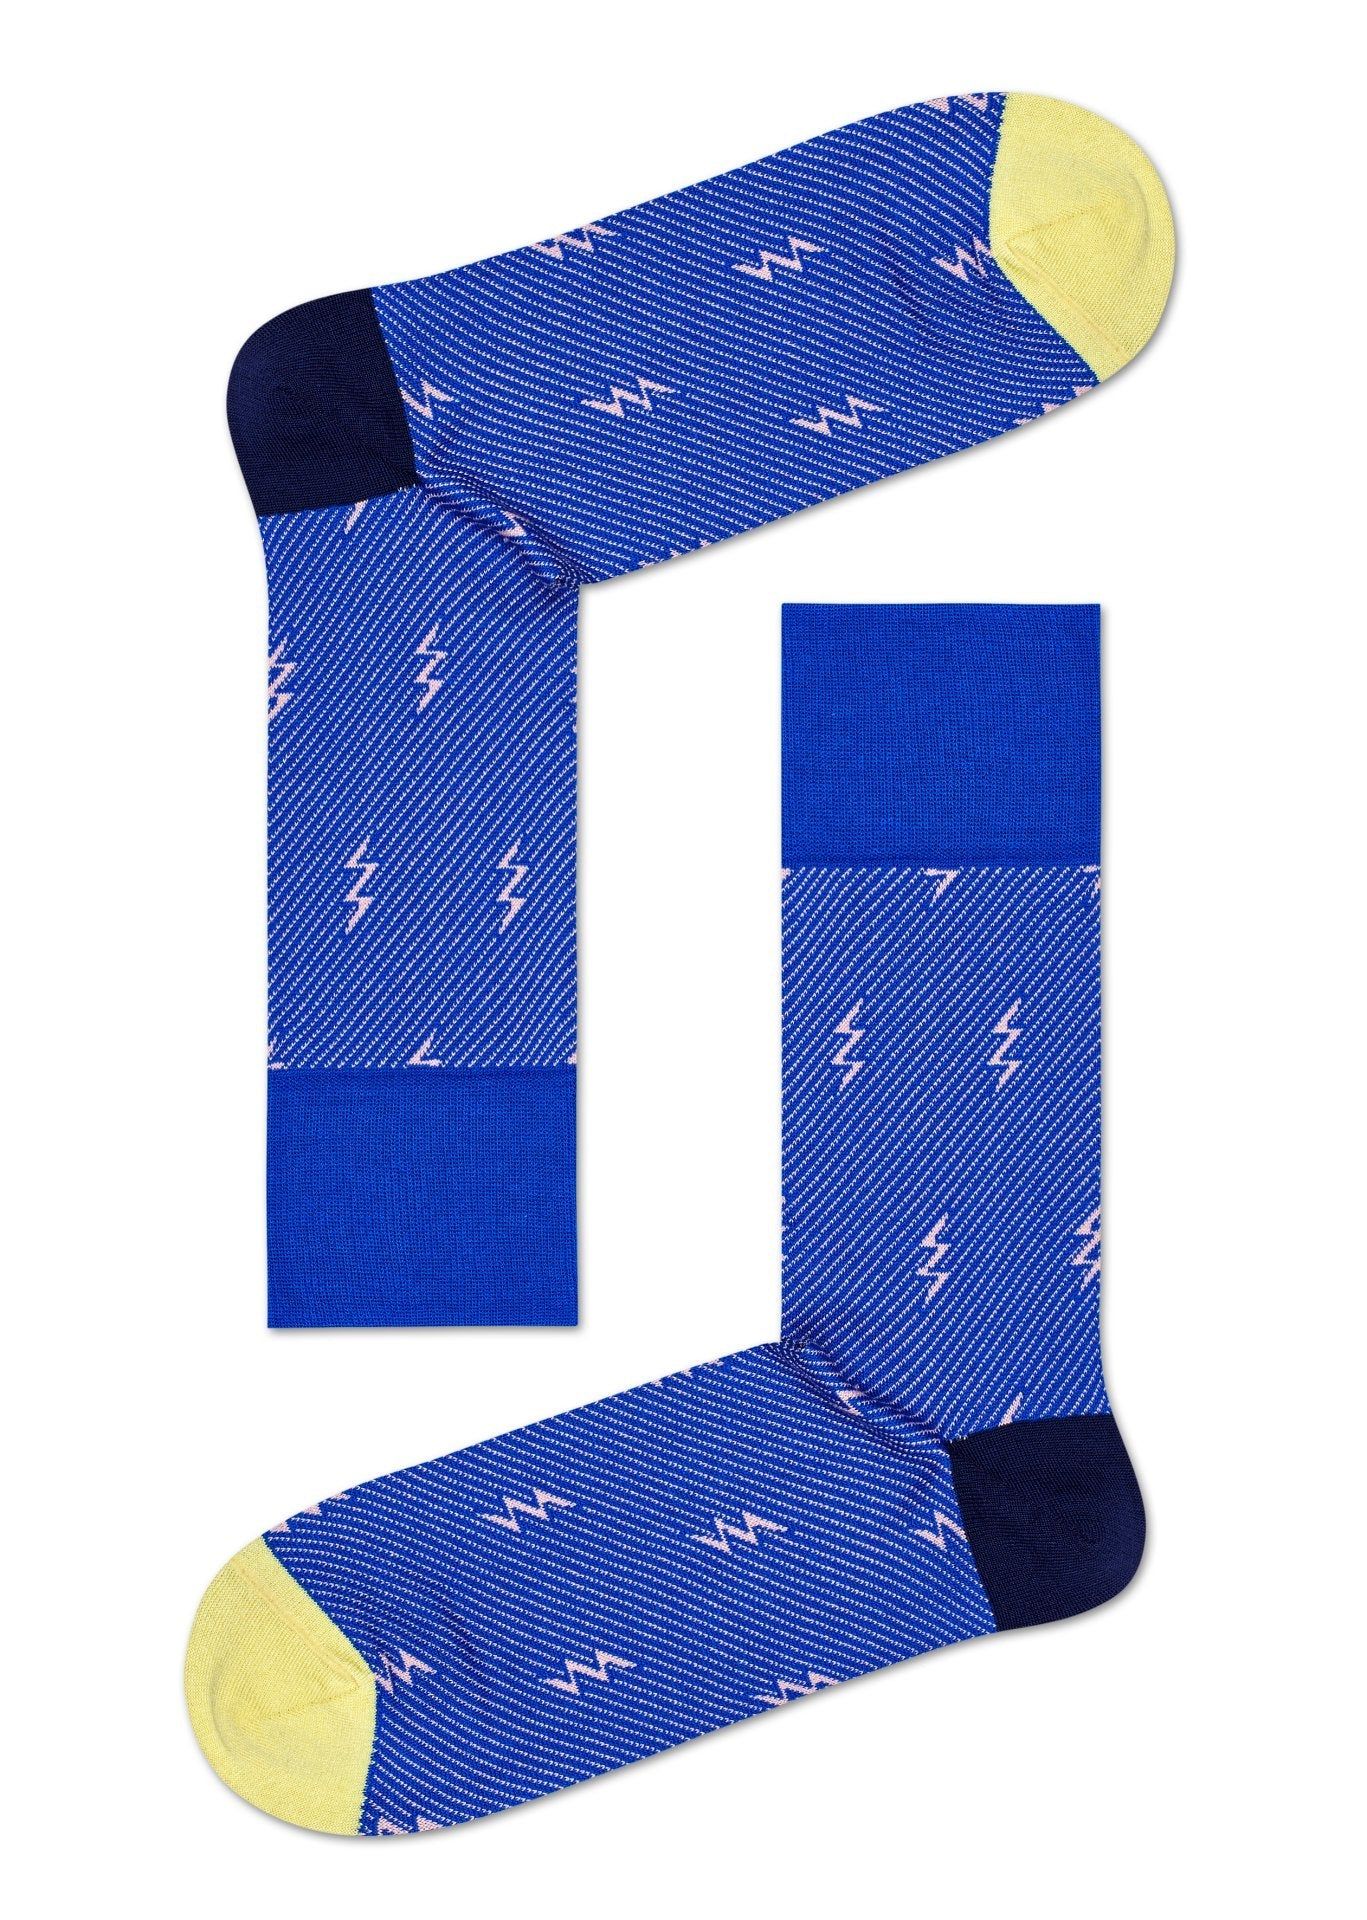 Happy Socks Dressed Flash Sock-39-42